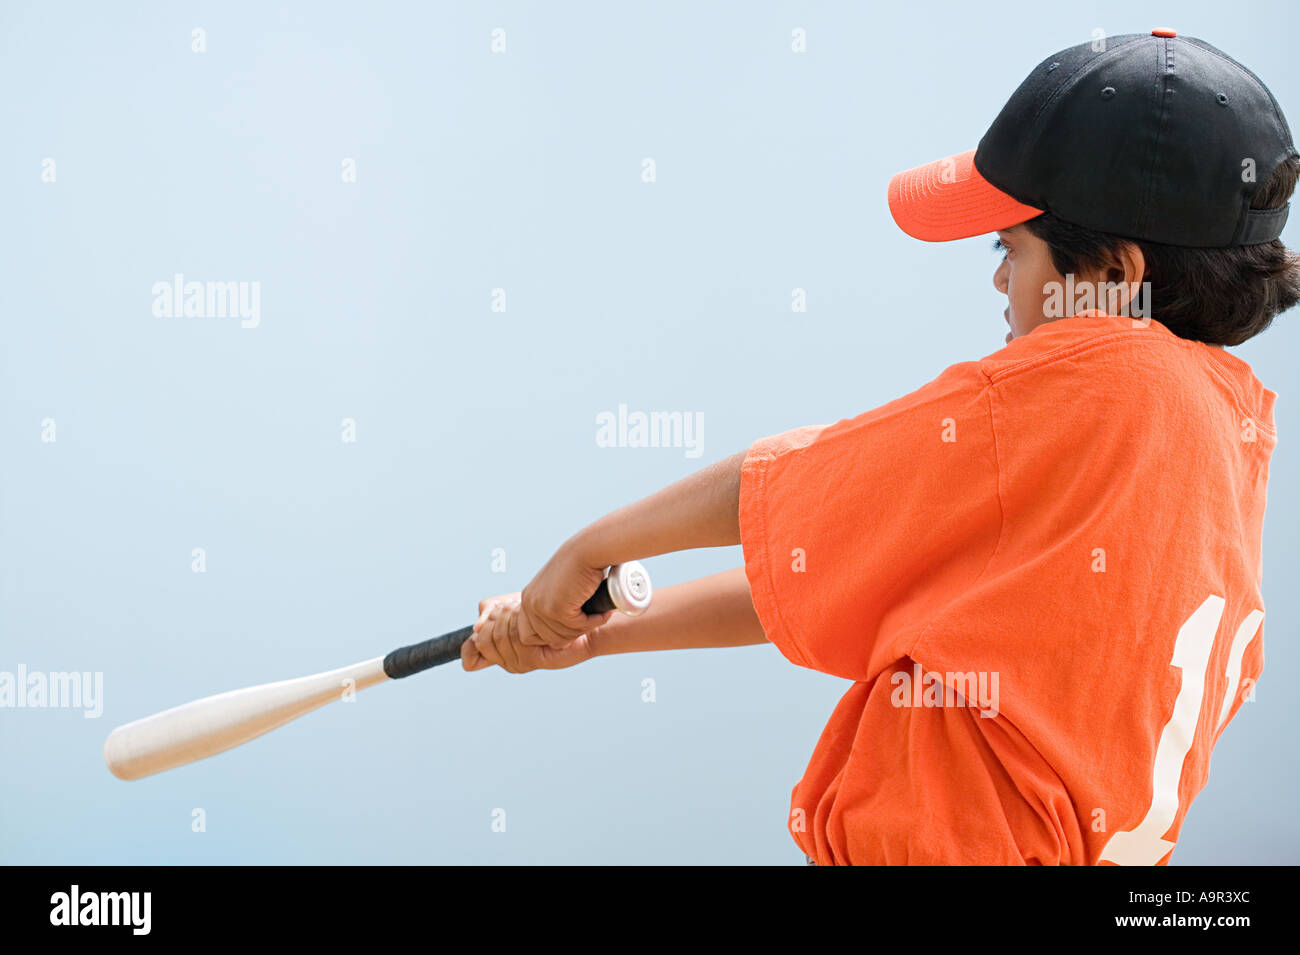 Boy swinging a baseball bat Stock Photo